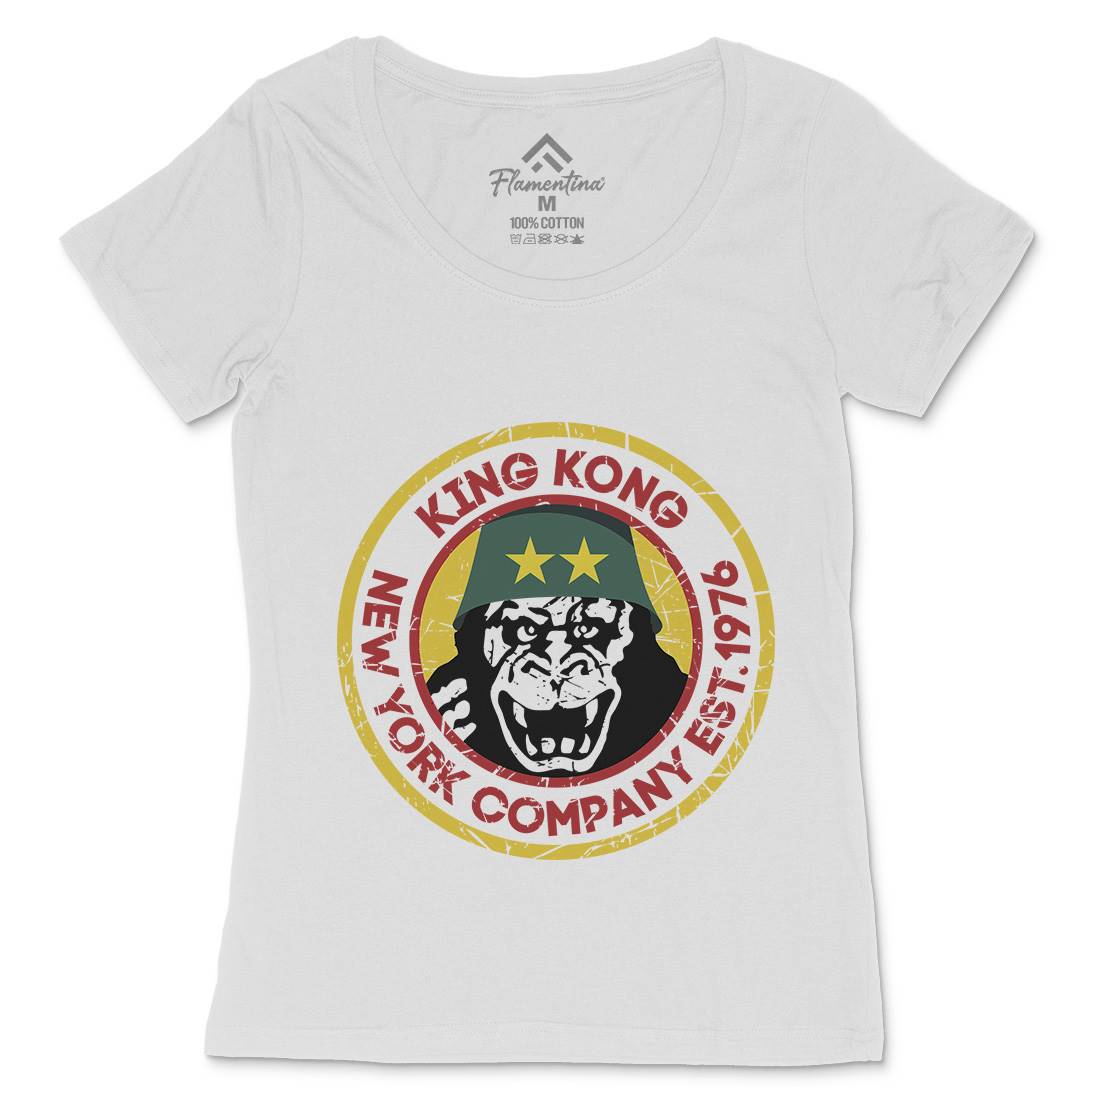 King Kong Company Womens Scoop Neck T-Shirt Retro D362